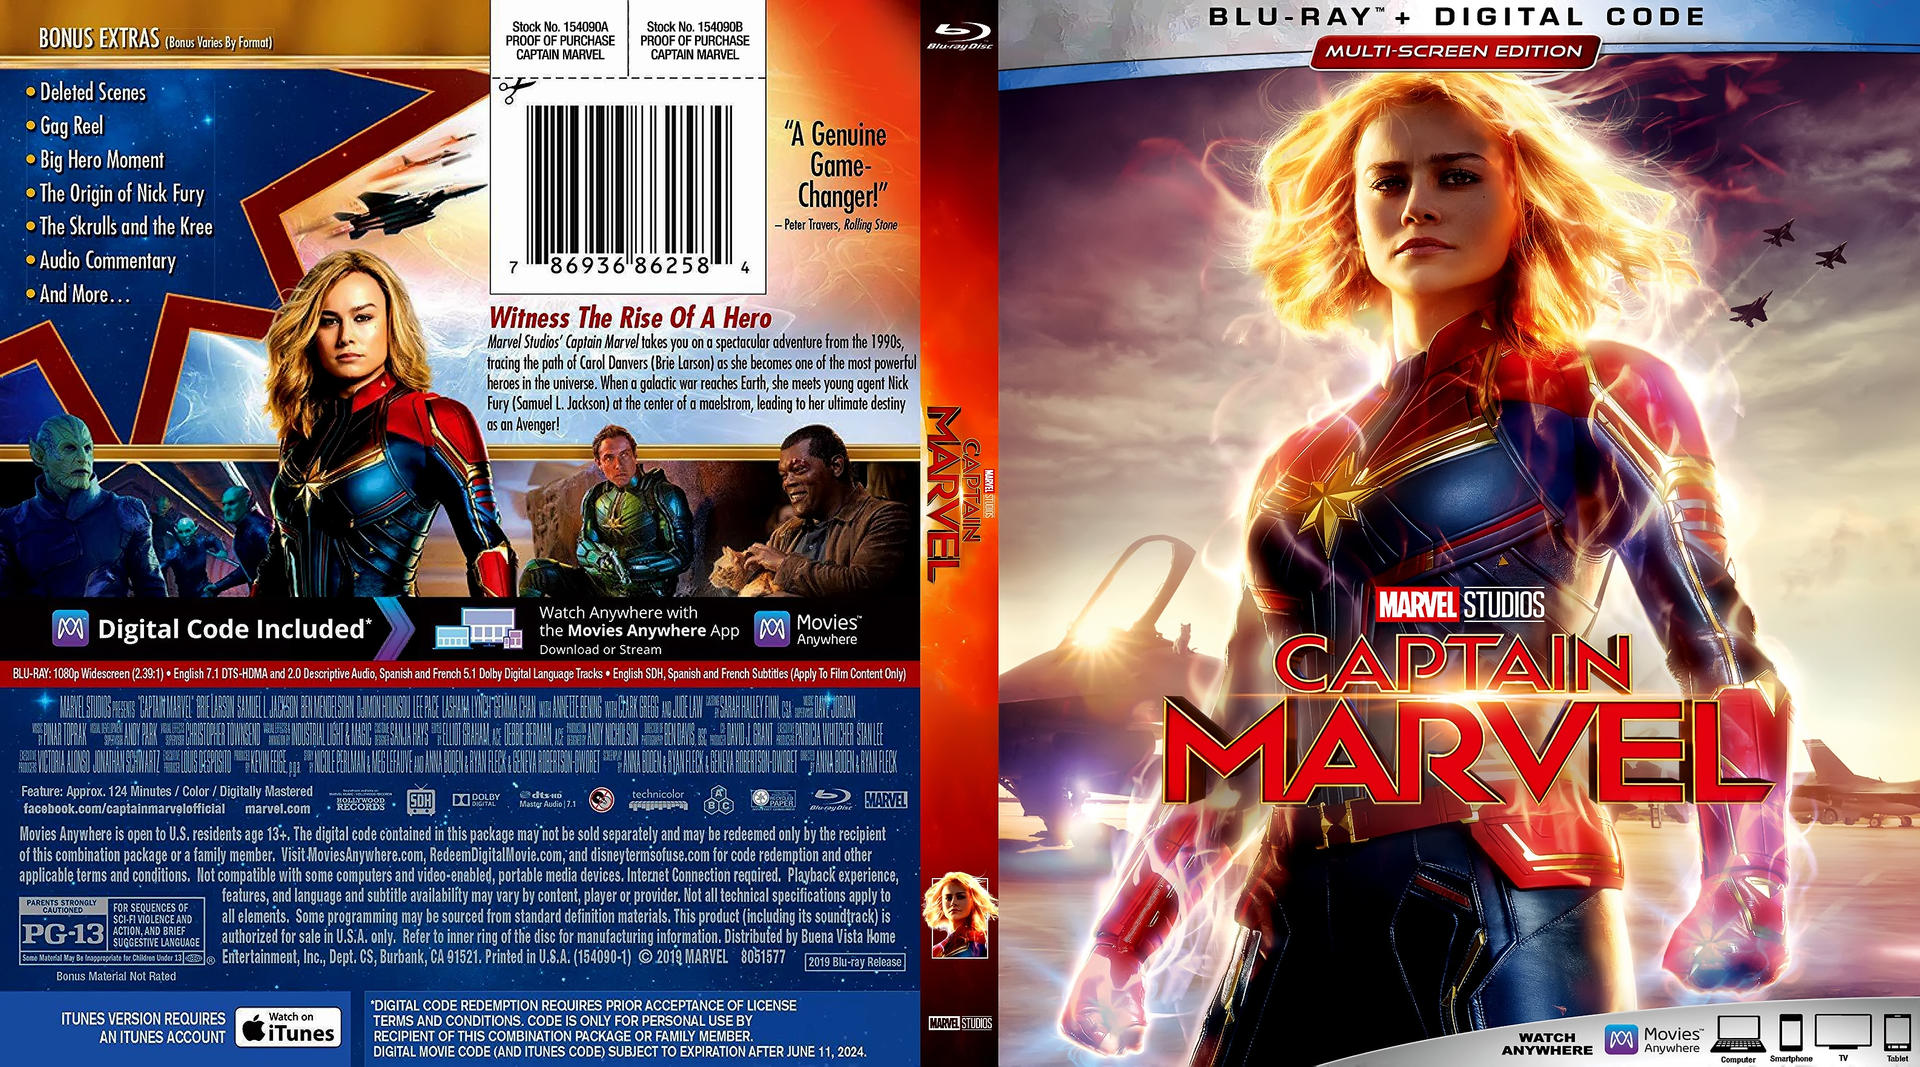 Captain Marvel Bluray Cover by psycosid09 on DeviantArt